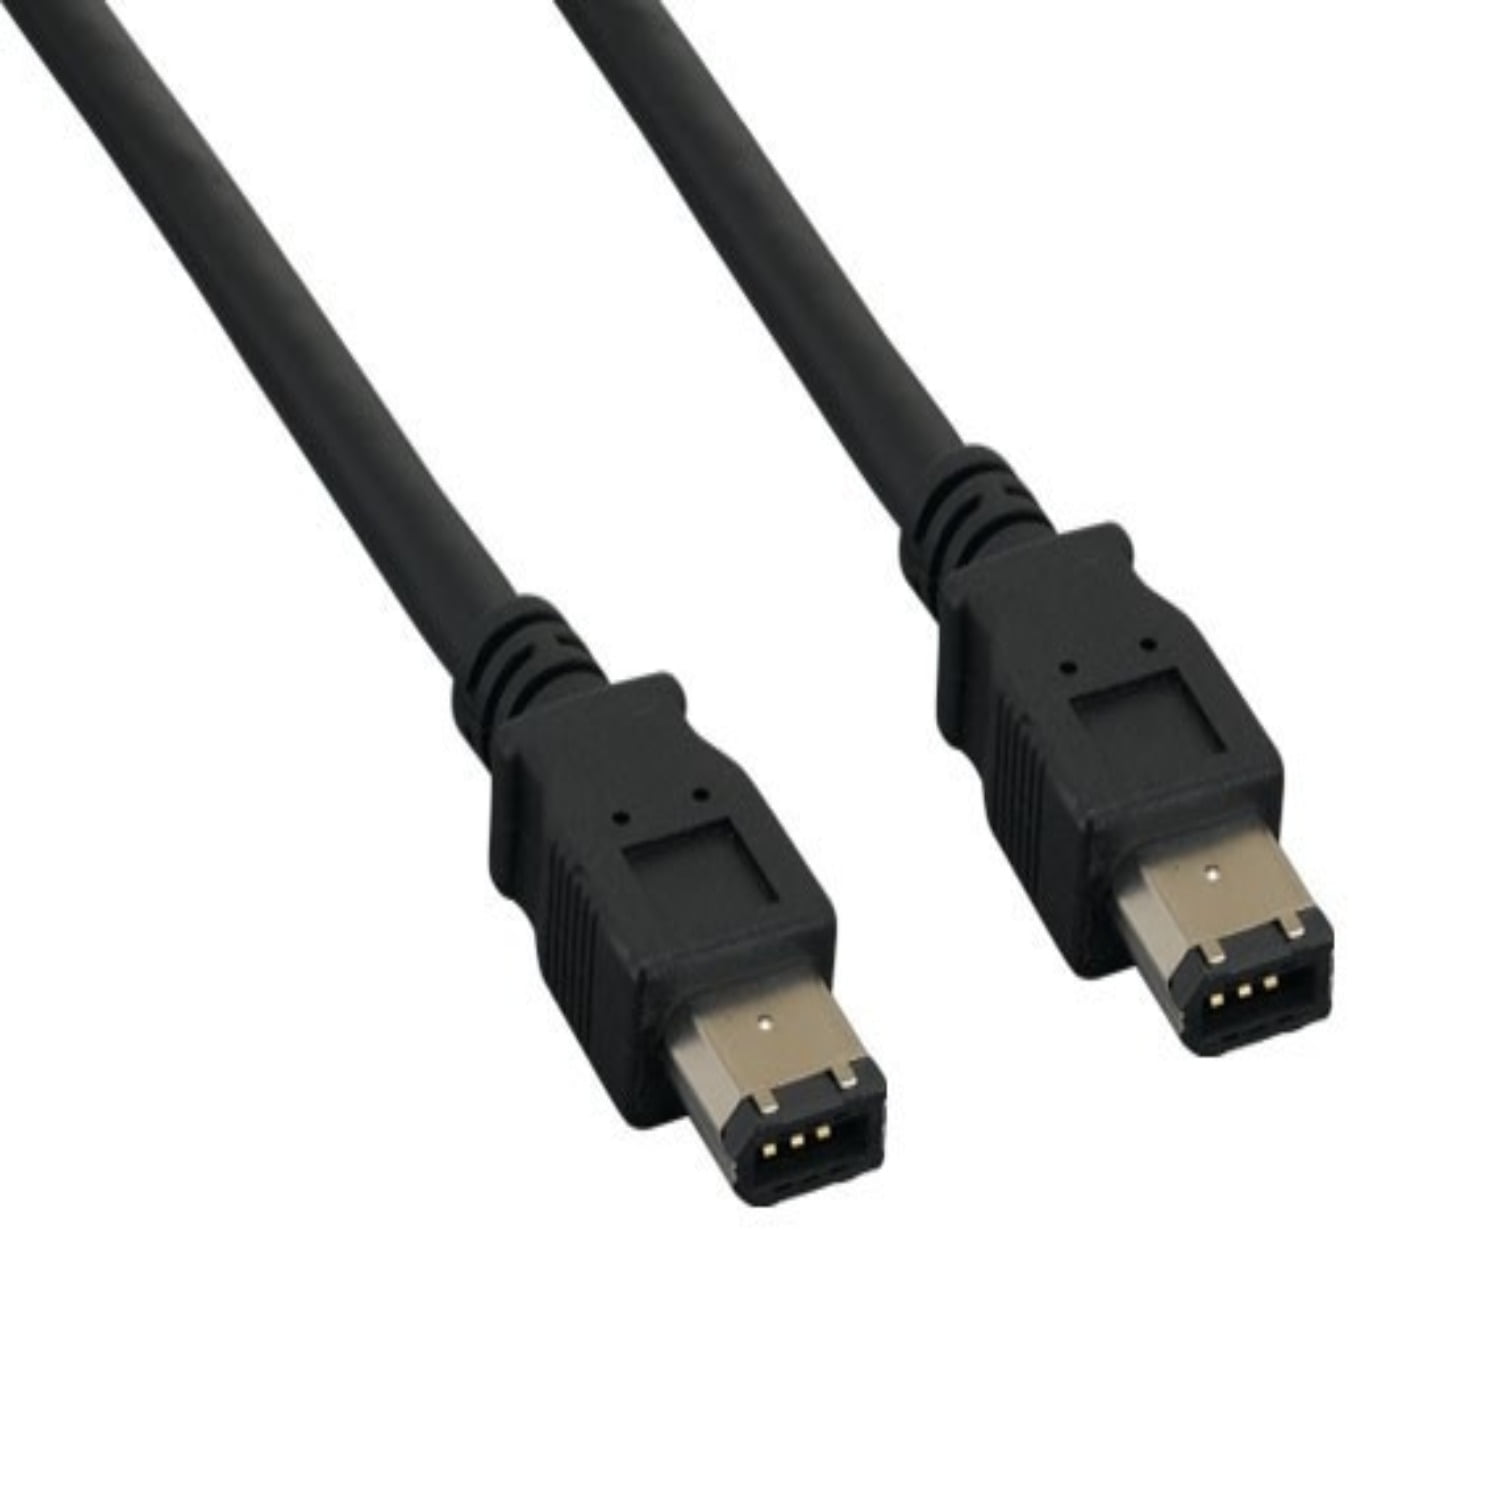 eSATA External Serial ATA Data Hard Drive Cable 1.2m *NEW* Lot of 2 Seagate 4FT 